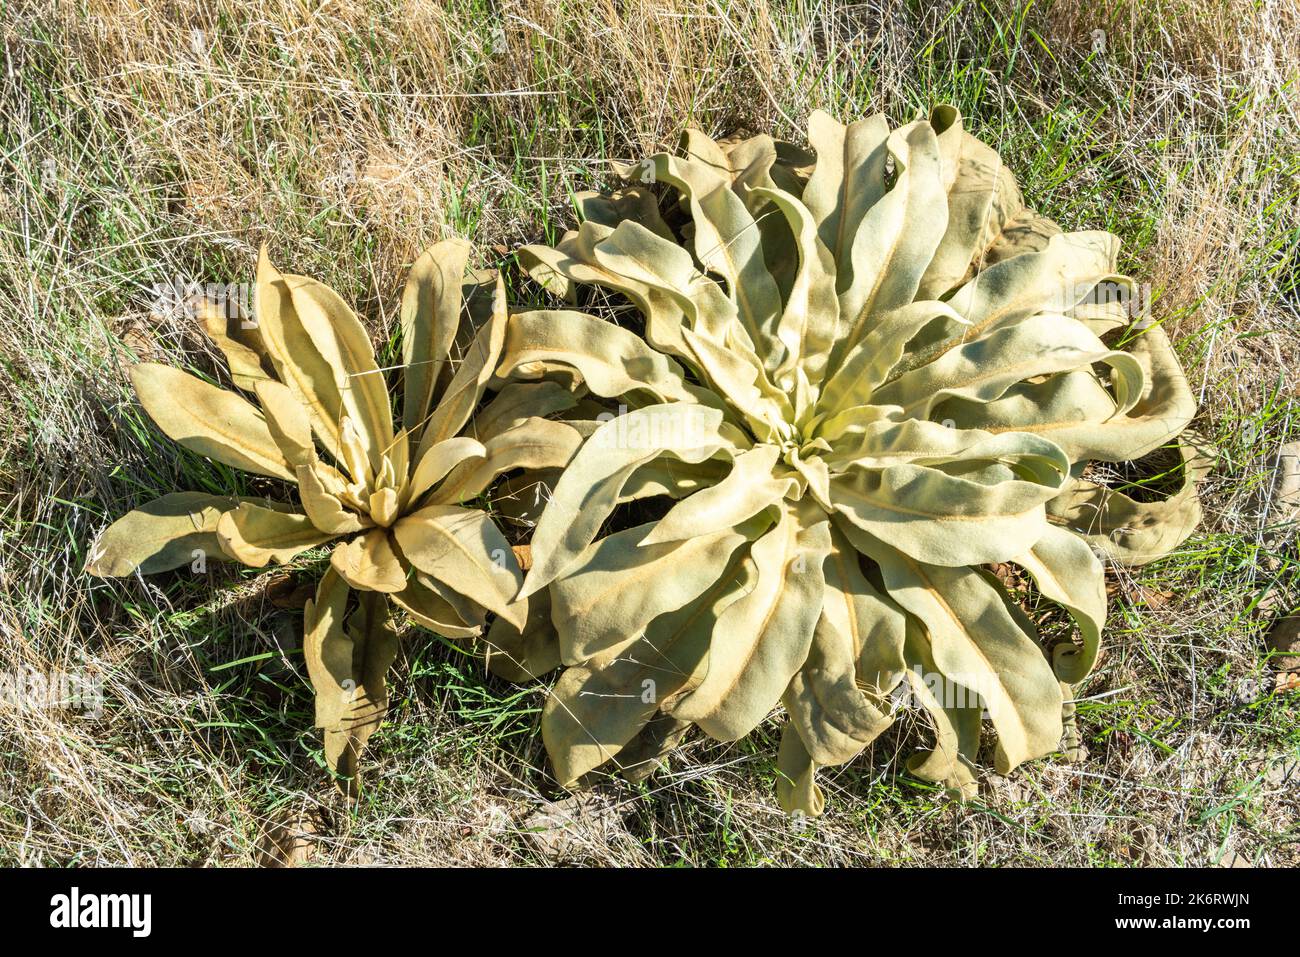 Rosetta senza stelo di foglie di Verbascum thapsus, una specie di pianta di mullein, nella Turchia mediterranea. Foto Stock